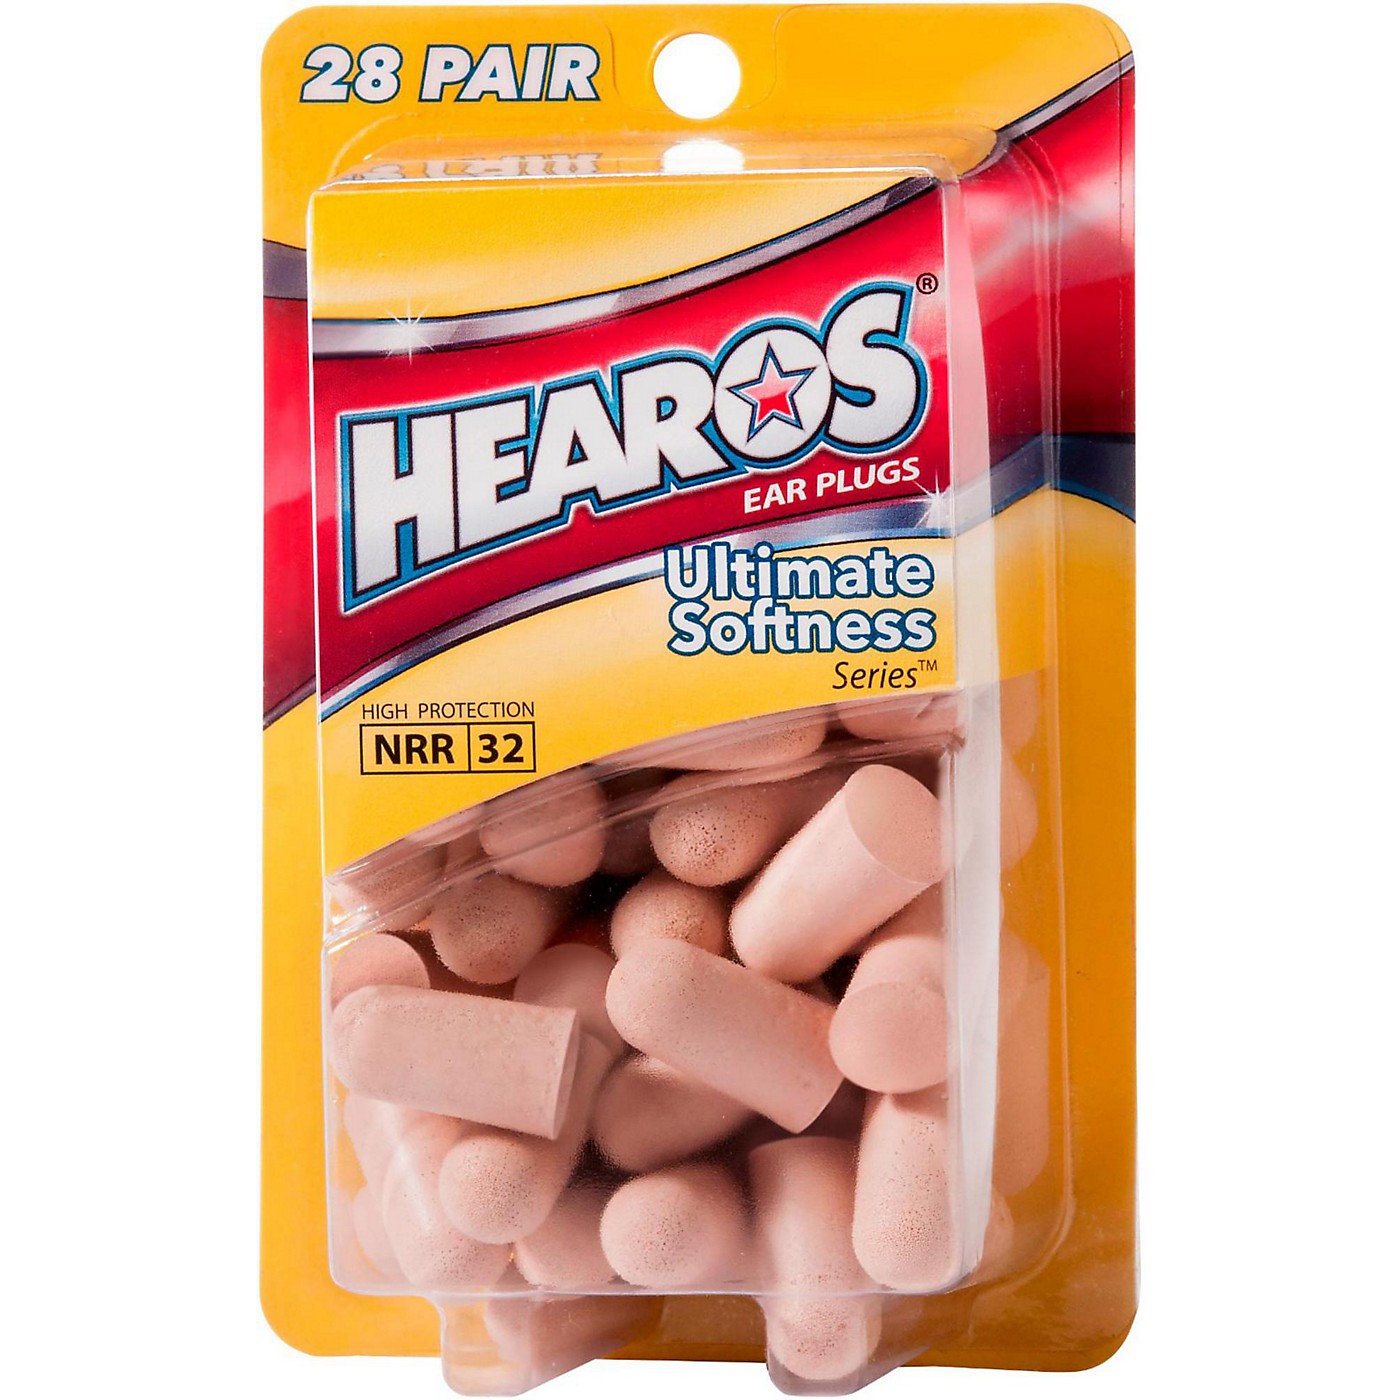 Hearos Ultimate Softness Series Ear Plugs 28 Pair thumbnail